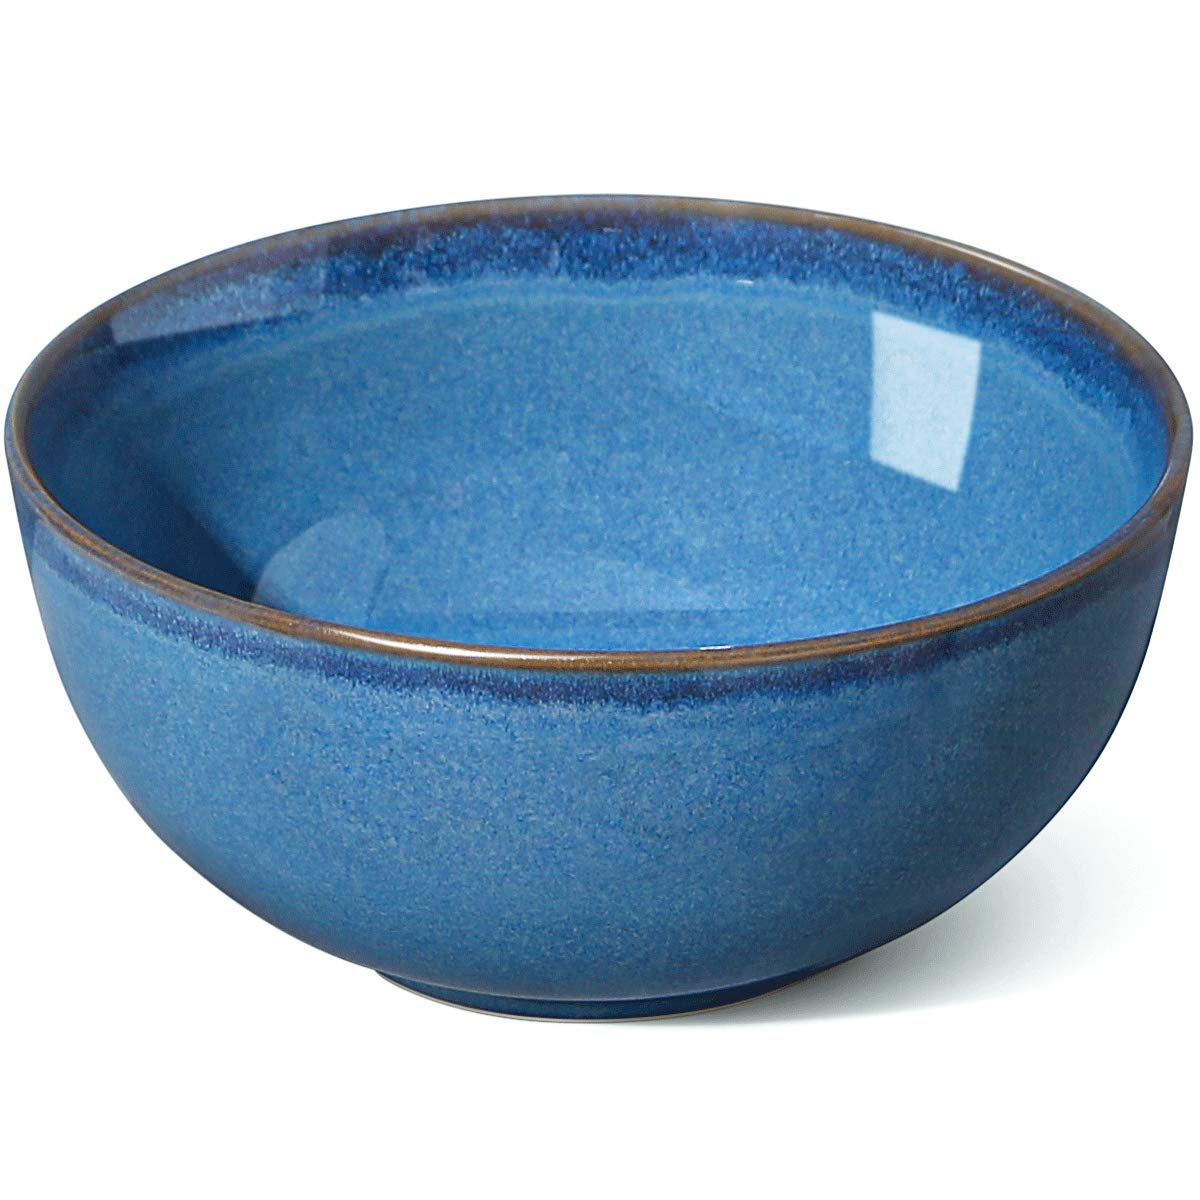 LE TAUCI Cereal Bowls 6 Inch, Ceramic Bowl Set for Soup, Dessert, Fruits, Salad, Noodle, Ramen, 22 Ounce Bowls for Kitchen, Set of 4, Ceylon blue